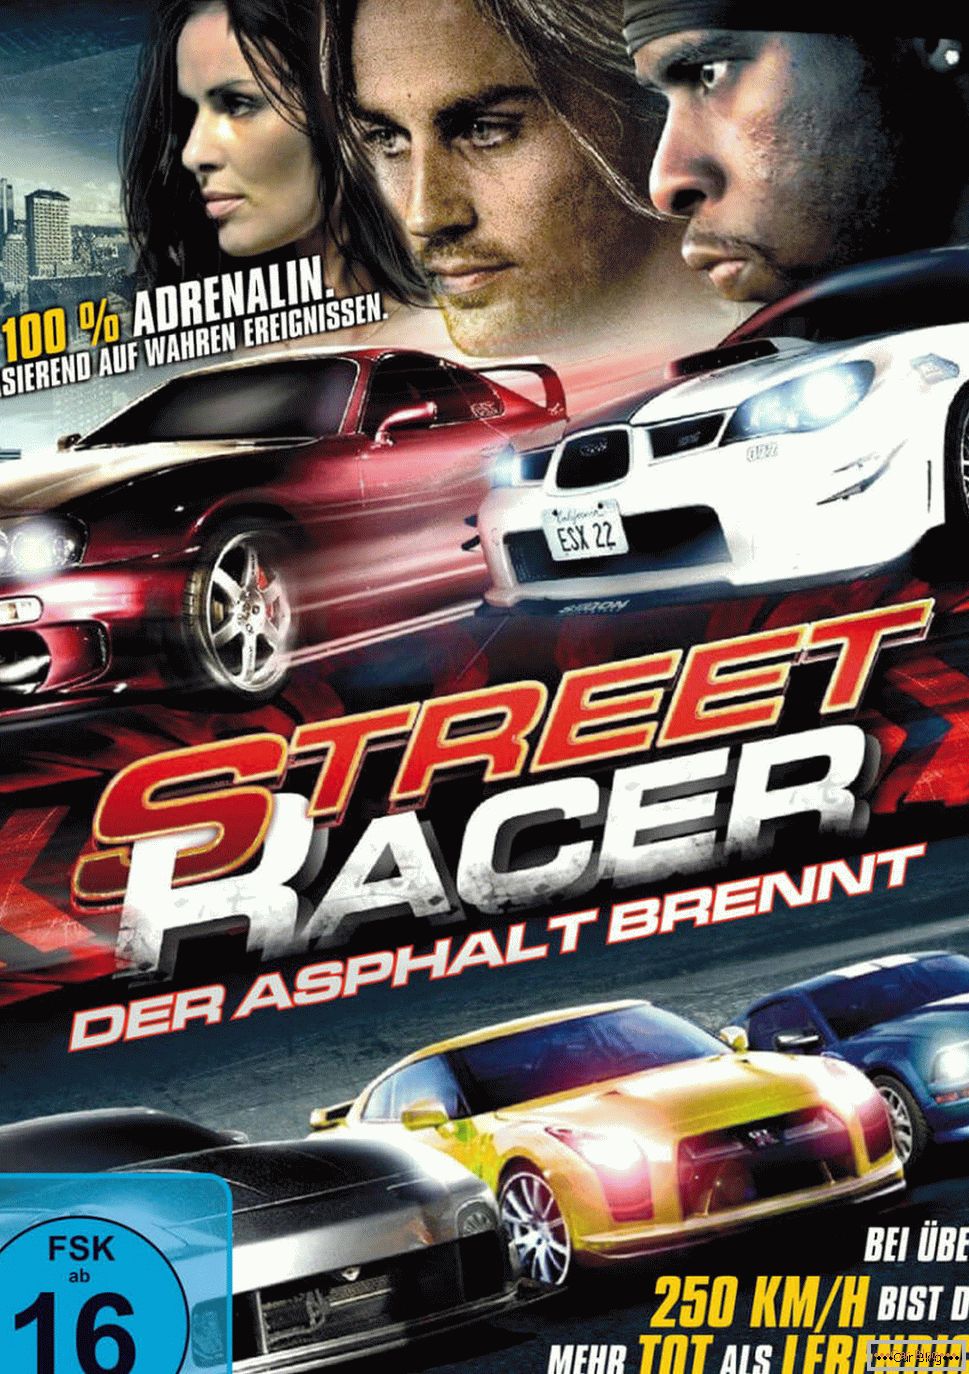 Poster za film Street racer